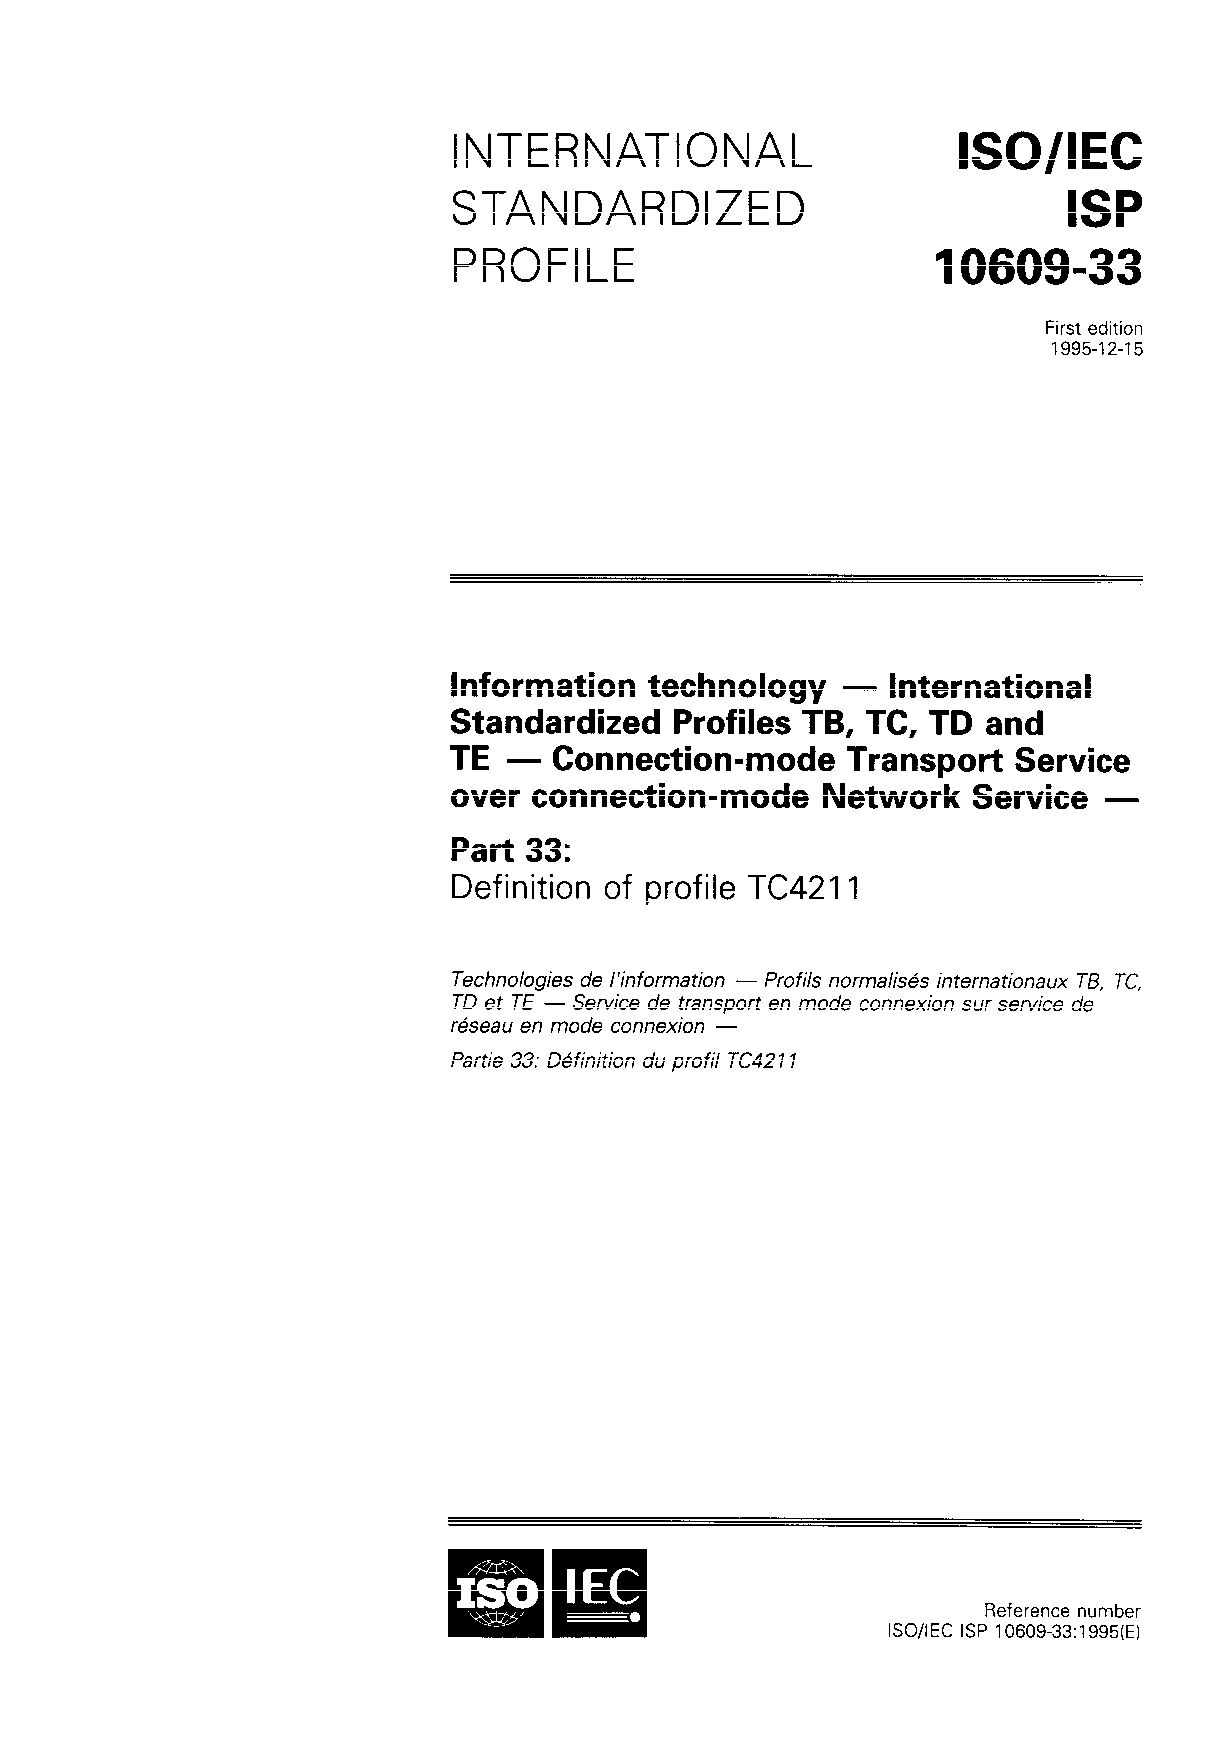 ISO/IEC ISP 10609-33:1995